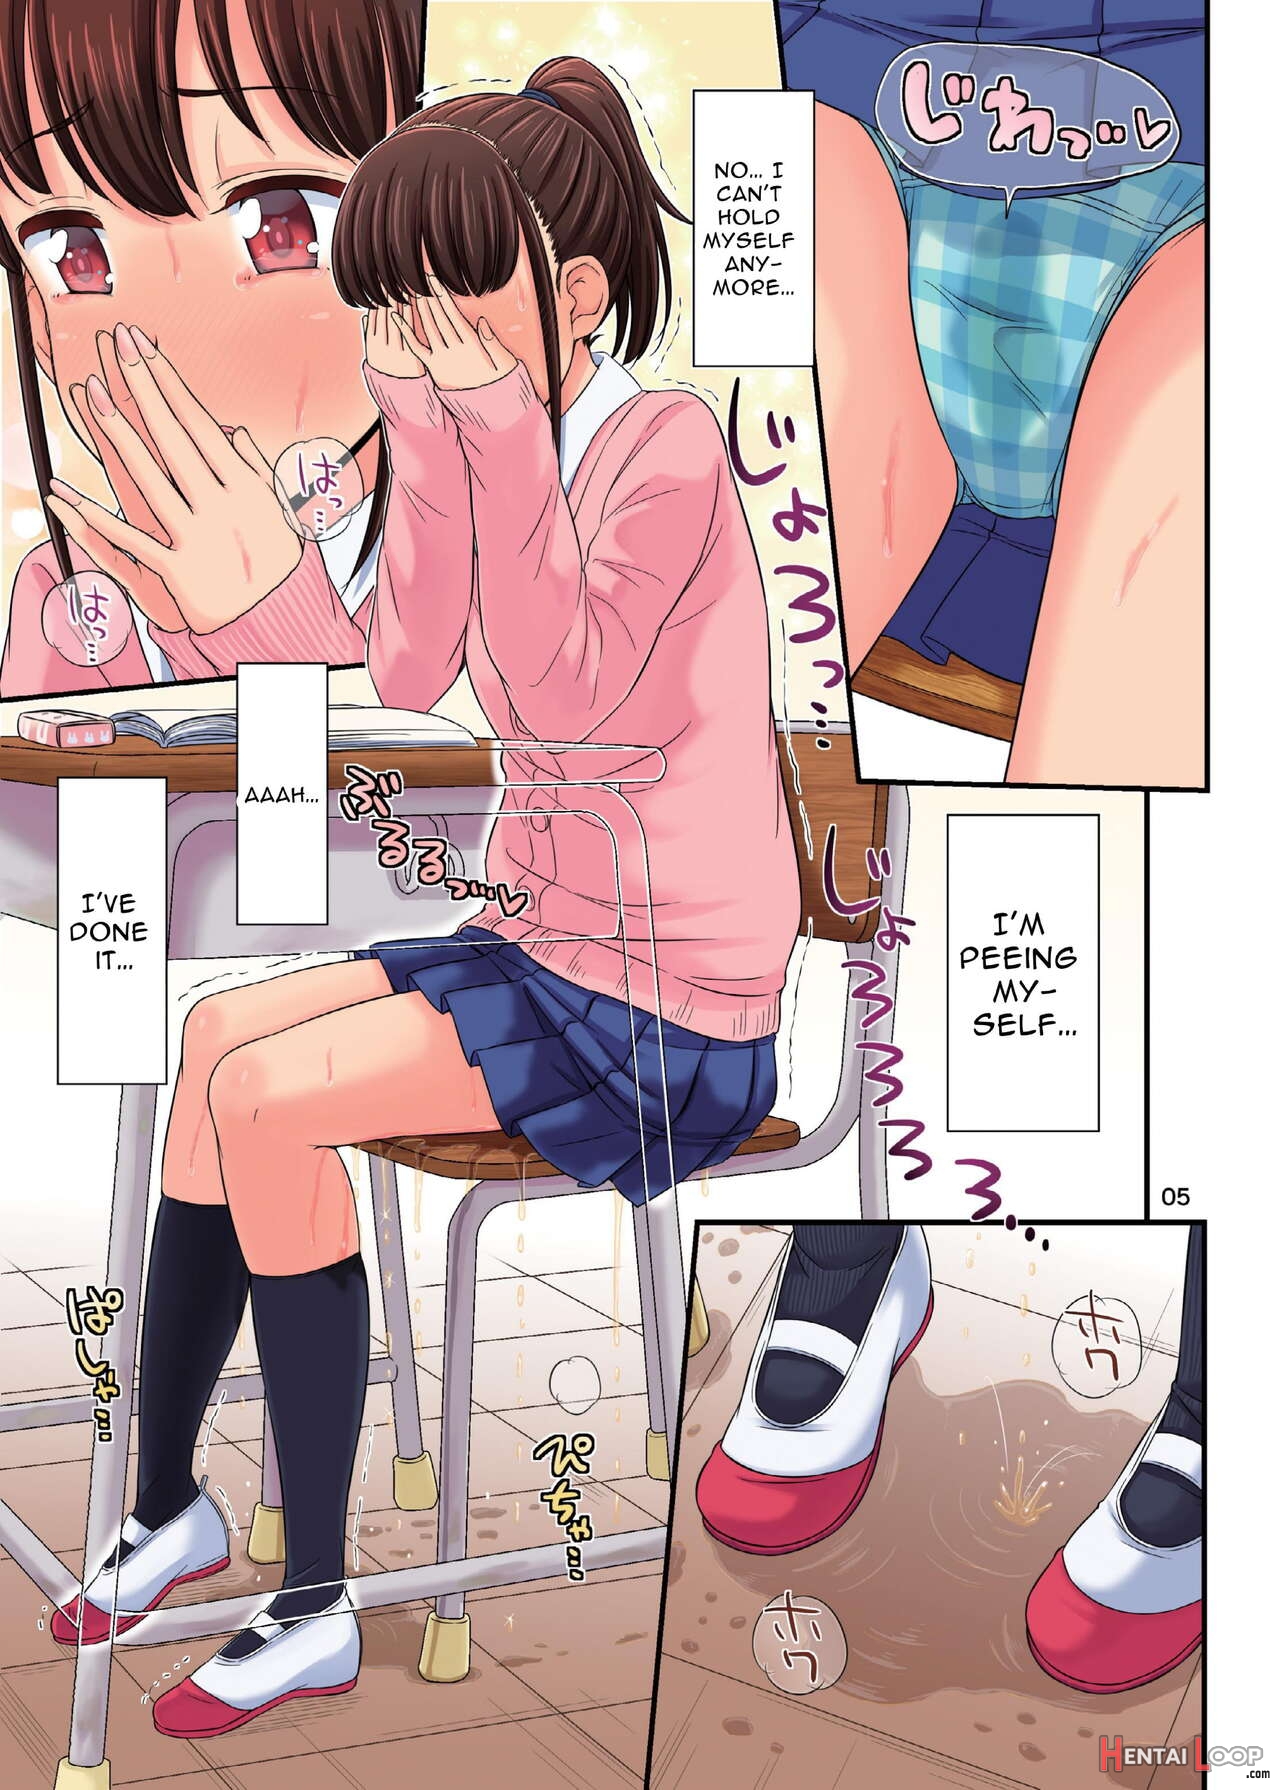 Page 7 of Oshikko Hyakkei 4 – Urination Scenes #4 (by Tsuttsu) - Hentai  doujinshi for free at HentaiLoop